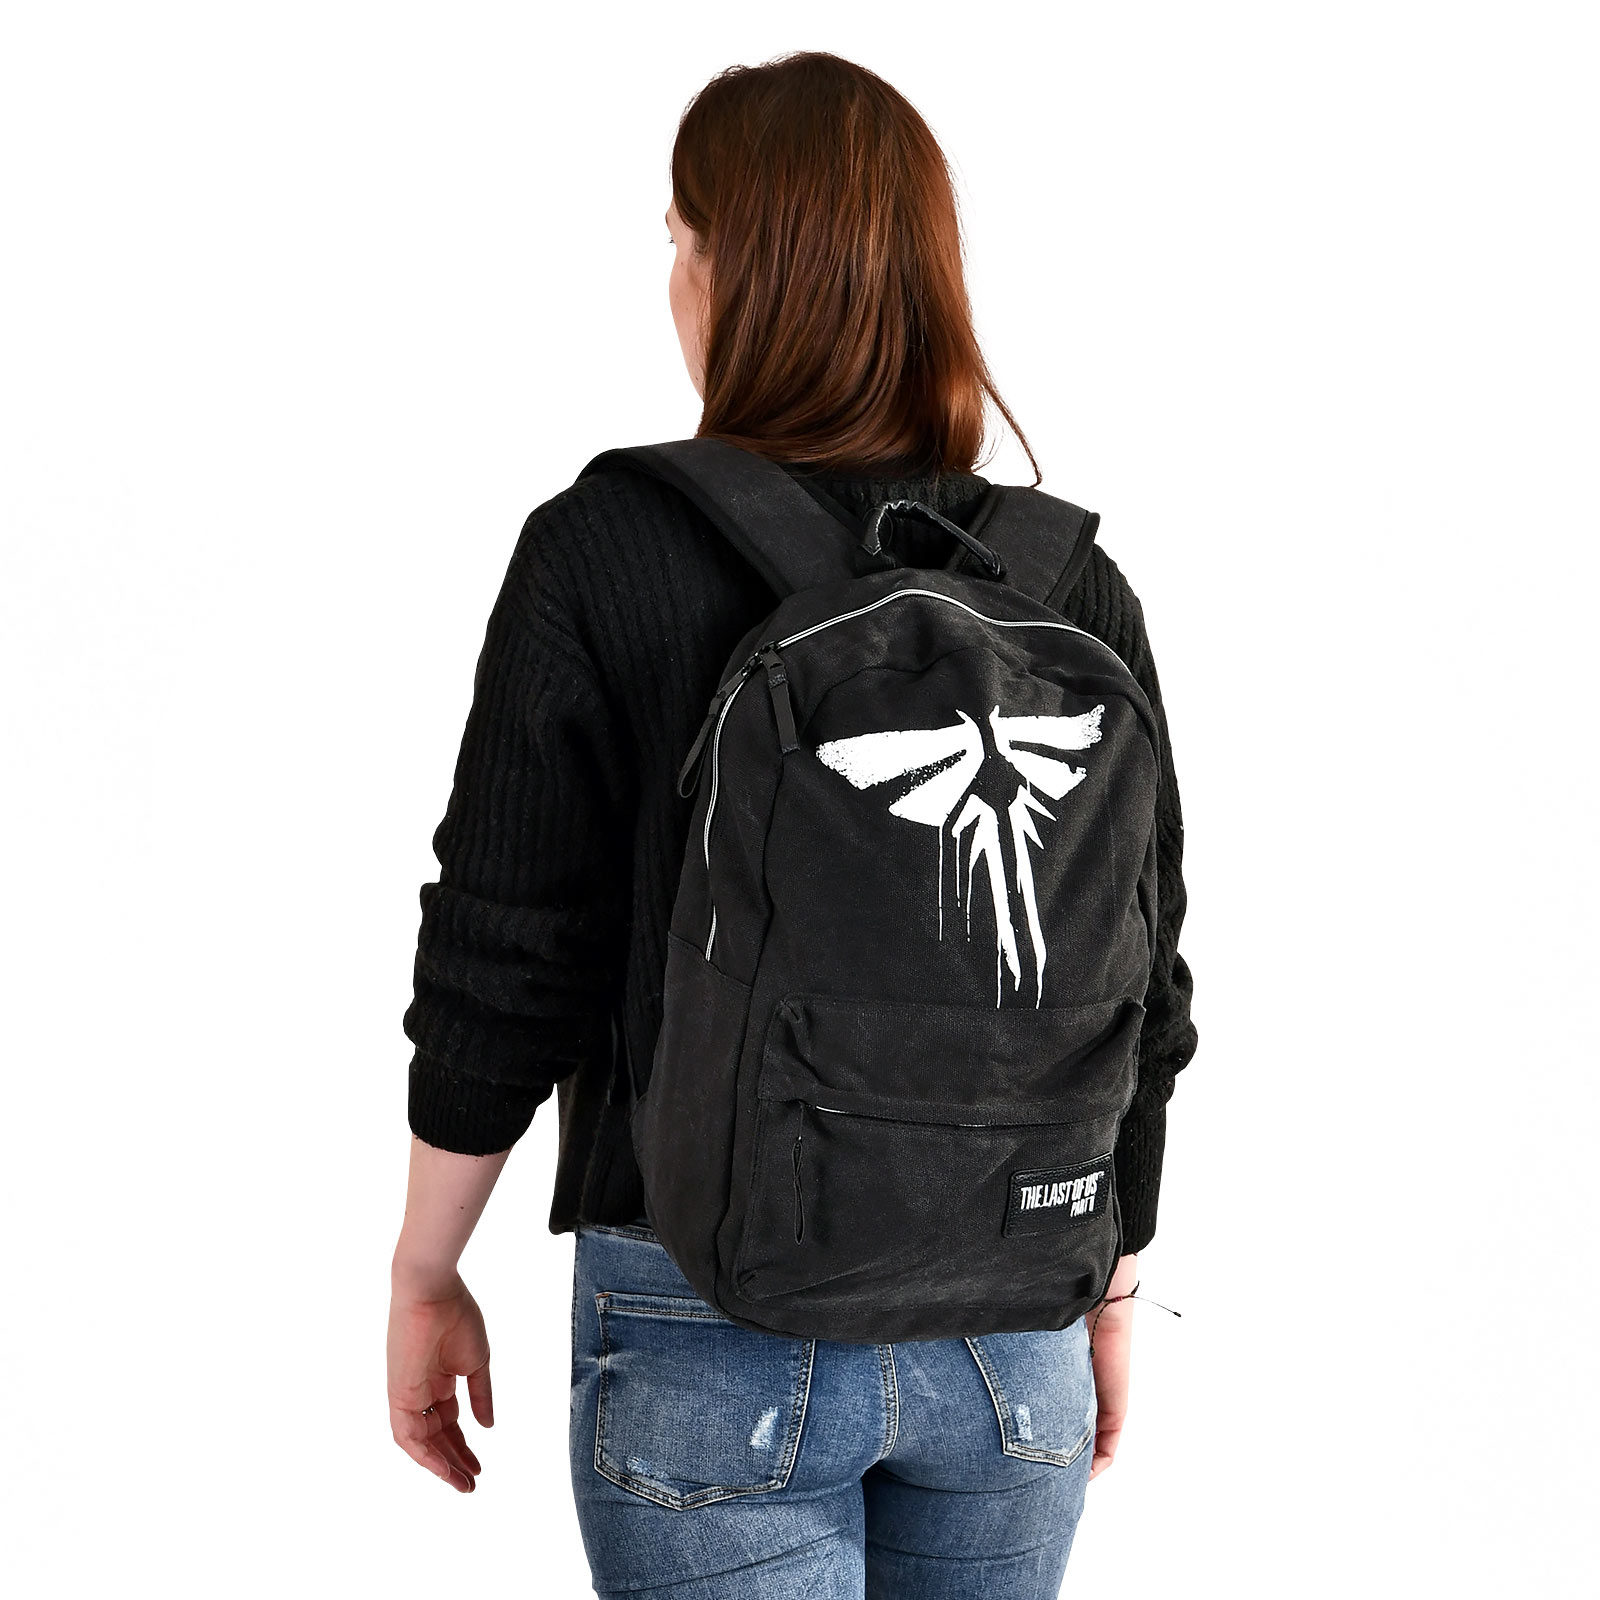 The Last of Us - Fireflies Logo Backpack black